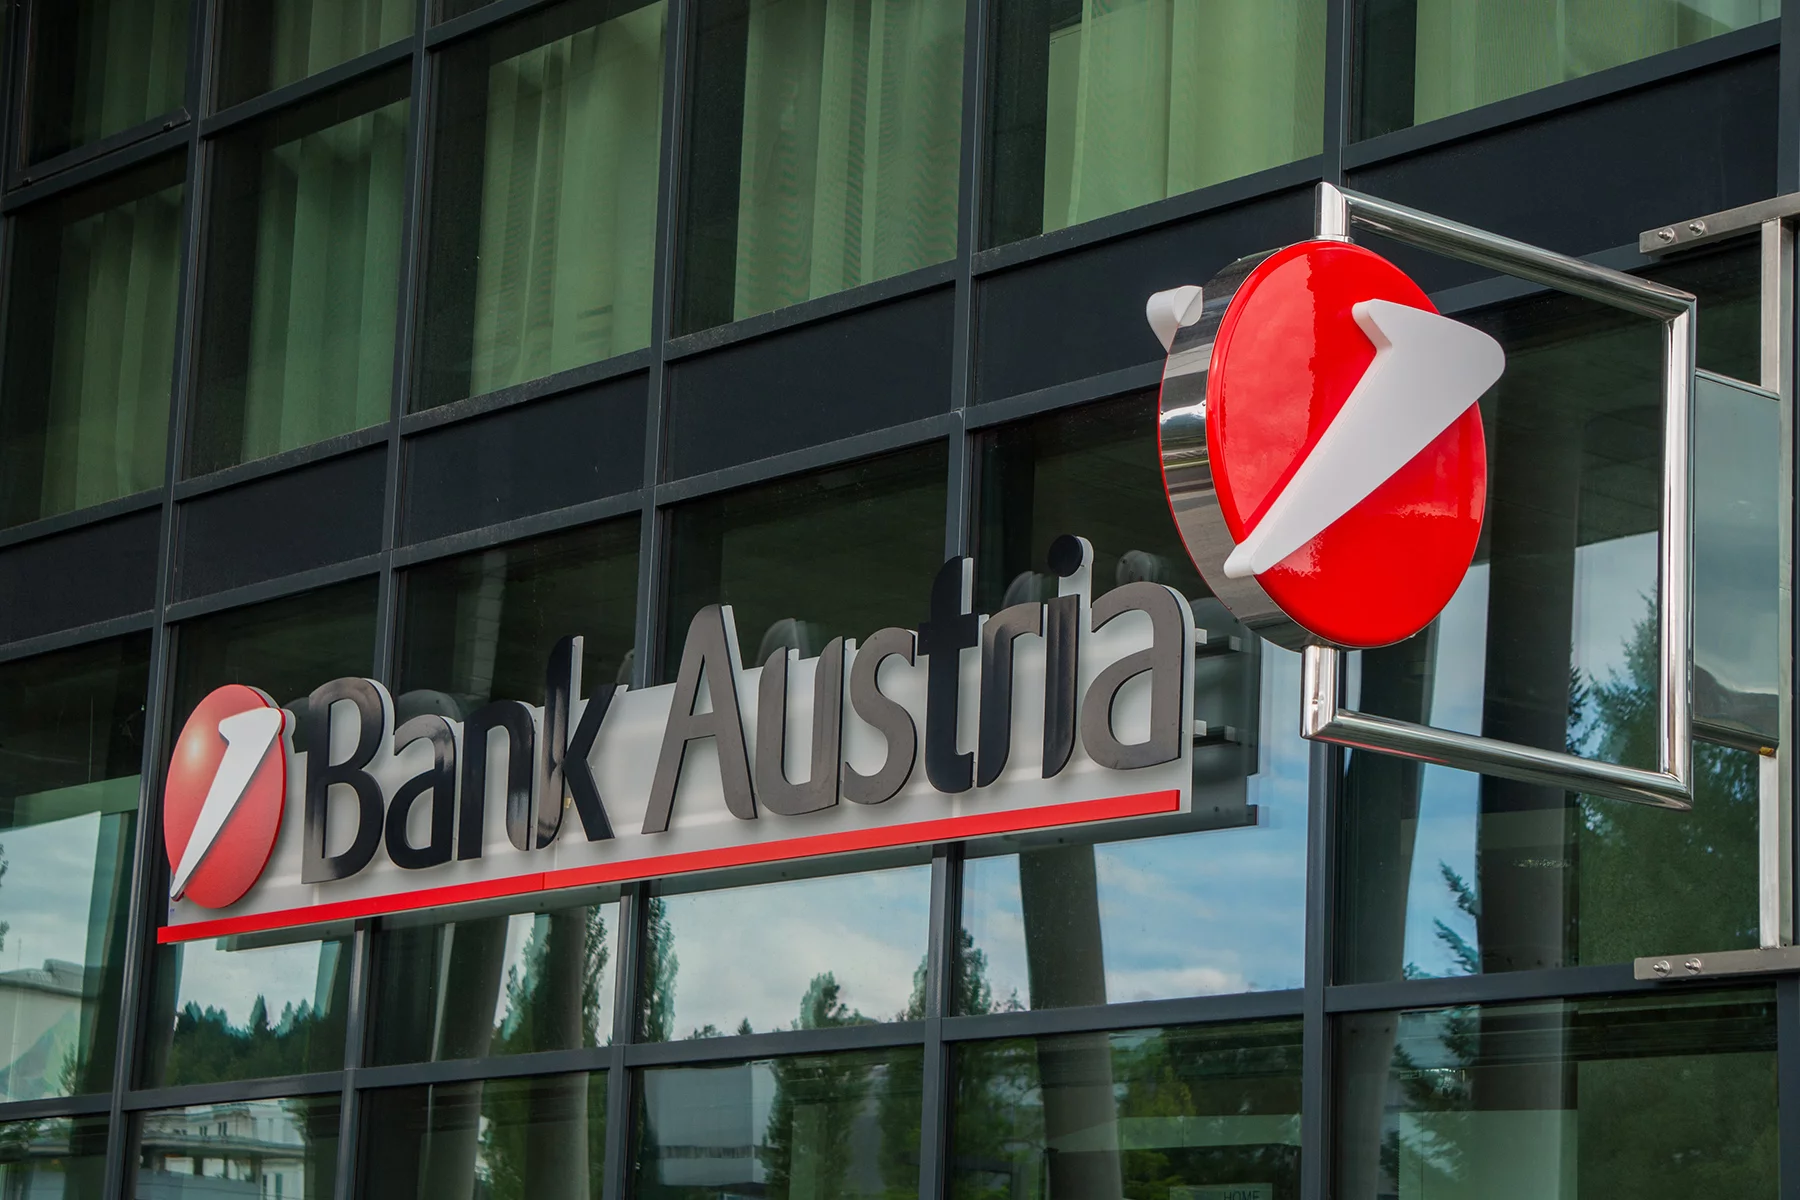 Bank Austria branch